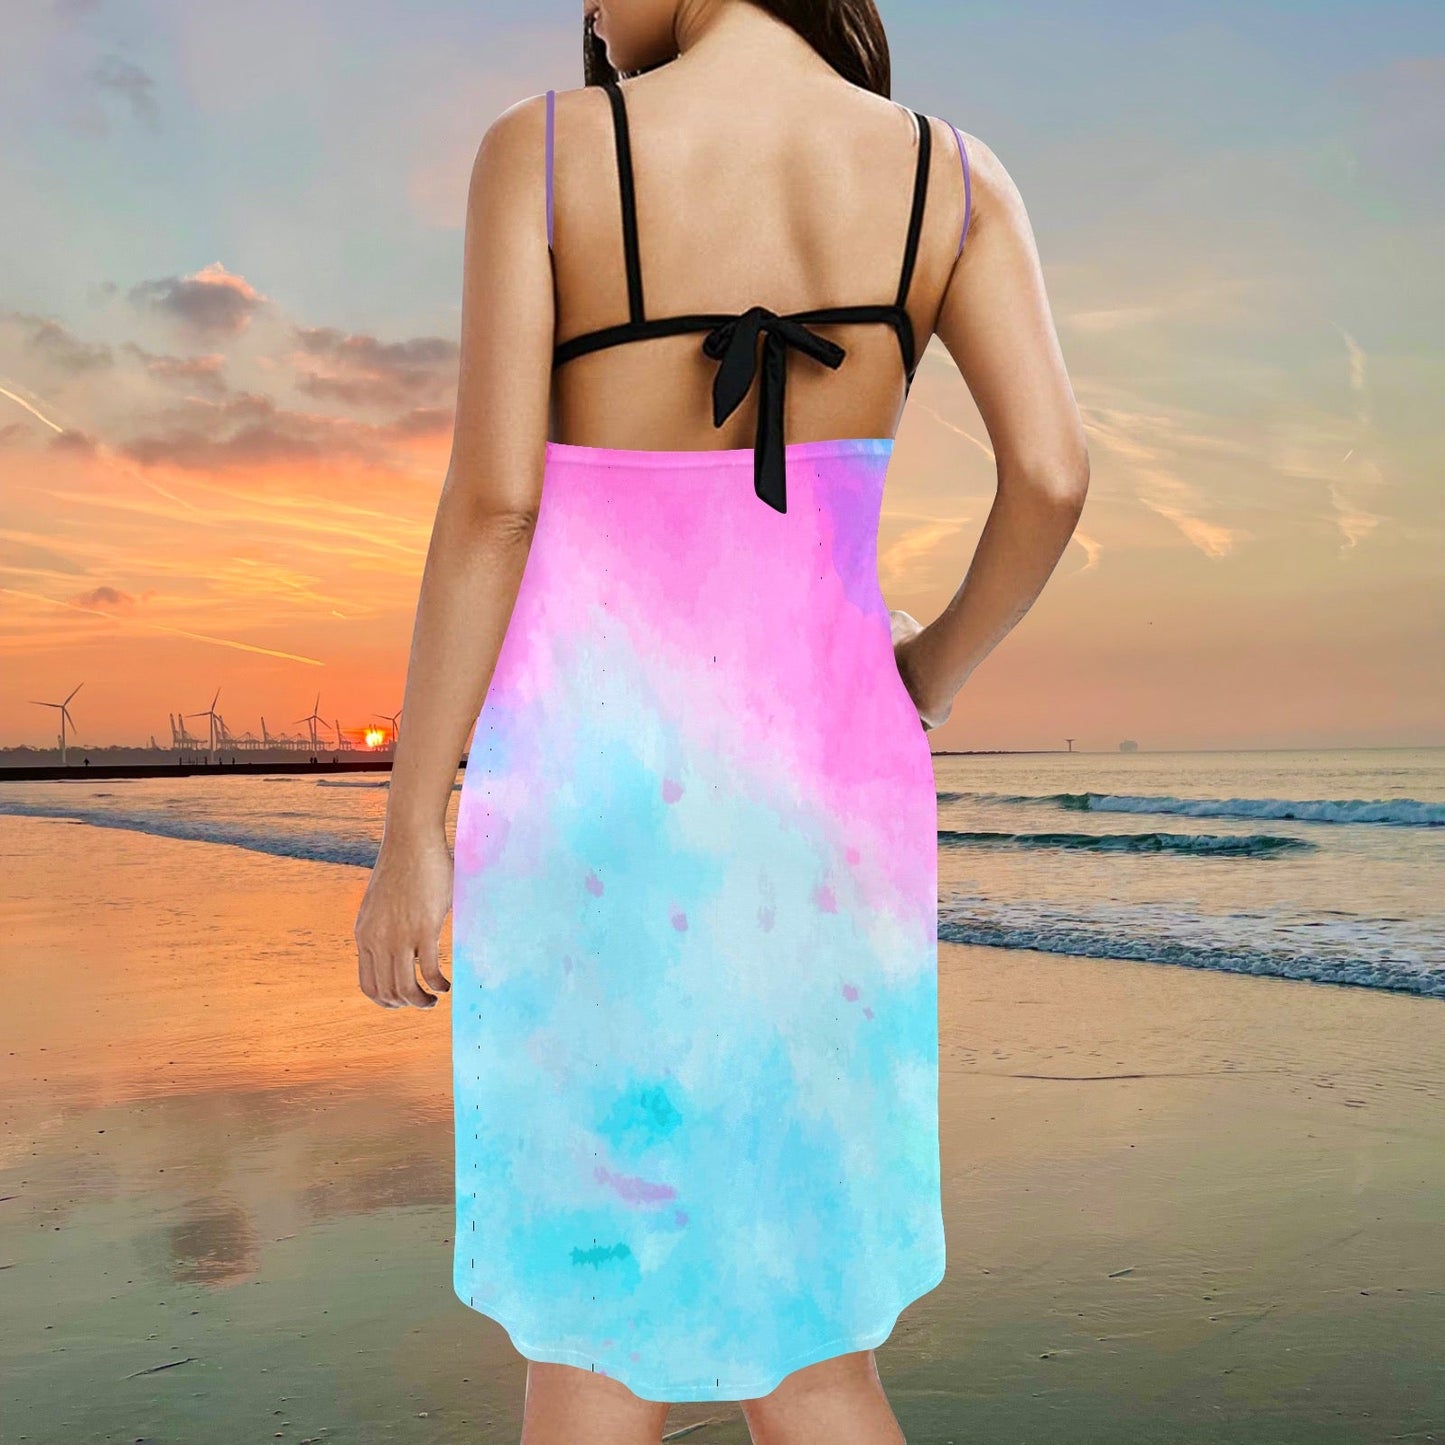 Spaghetti Strap Backless Beach Dress (D65) - Shell Yeah by JaksDarkSlateBlueS5C3676E426AC4F8FA0E55B91F84D5C0E